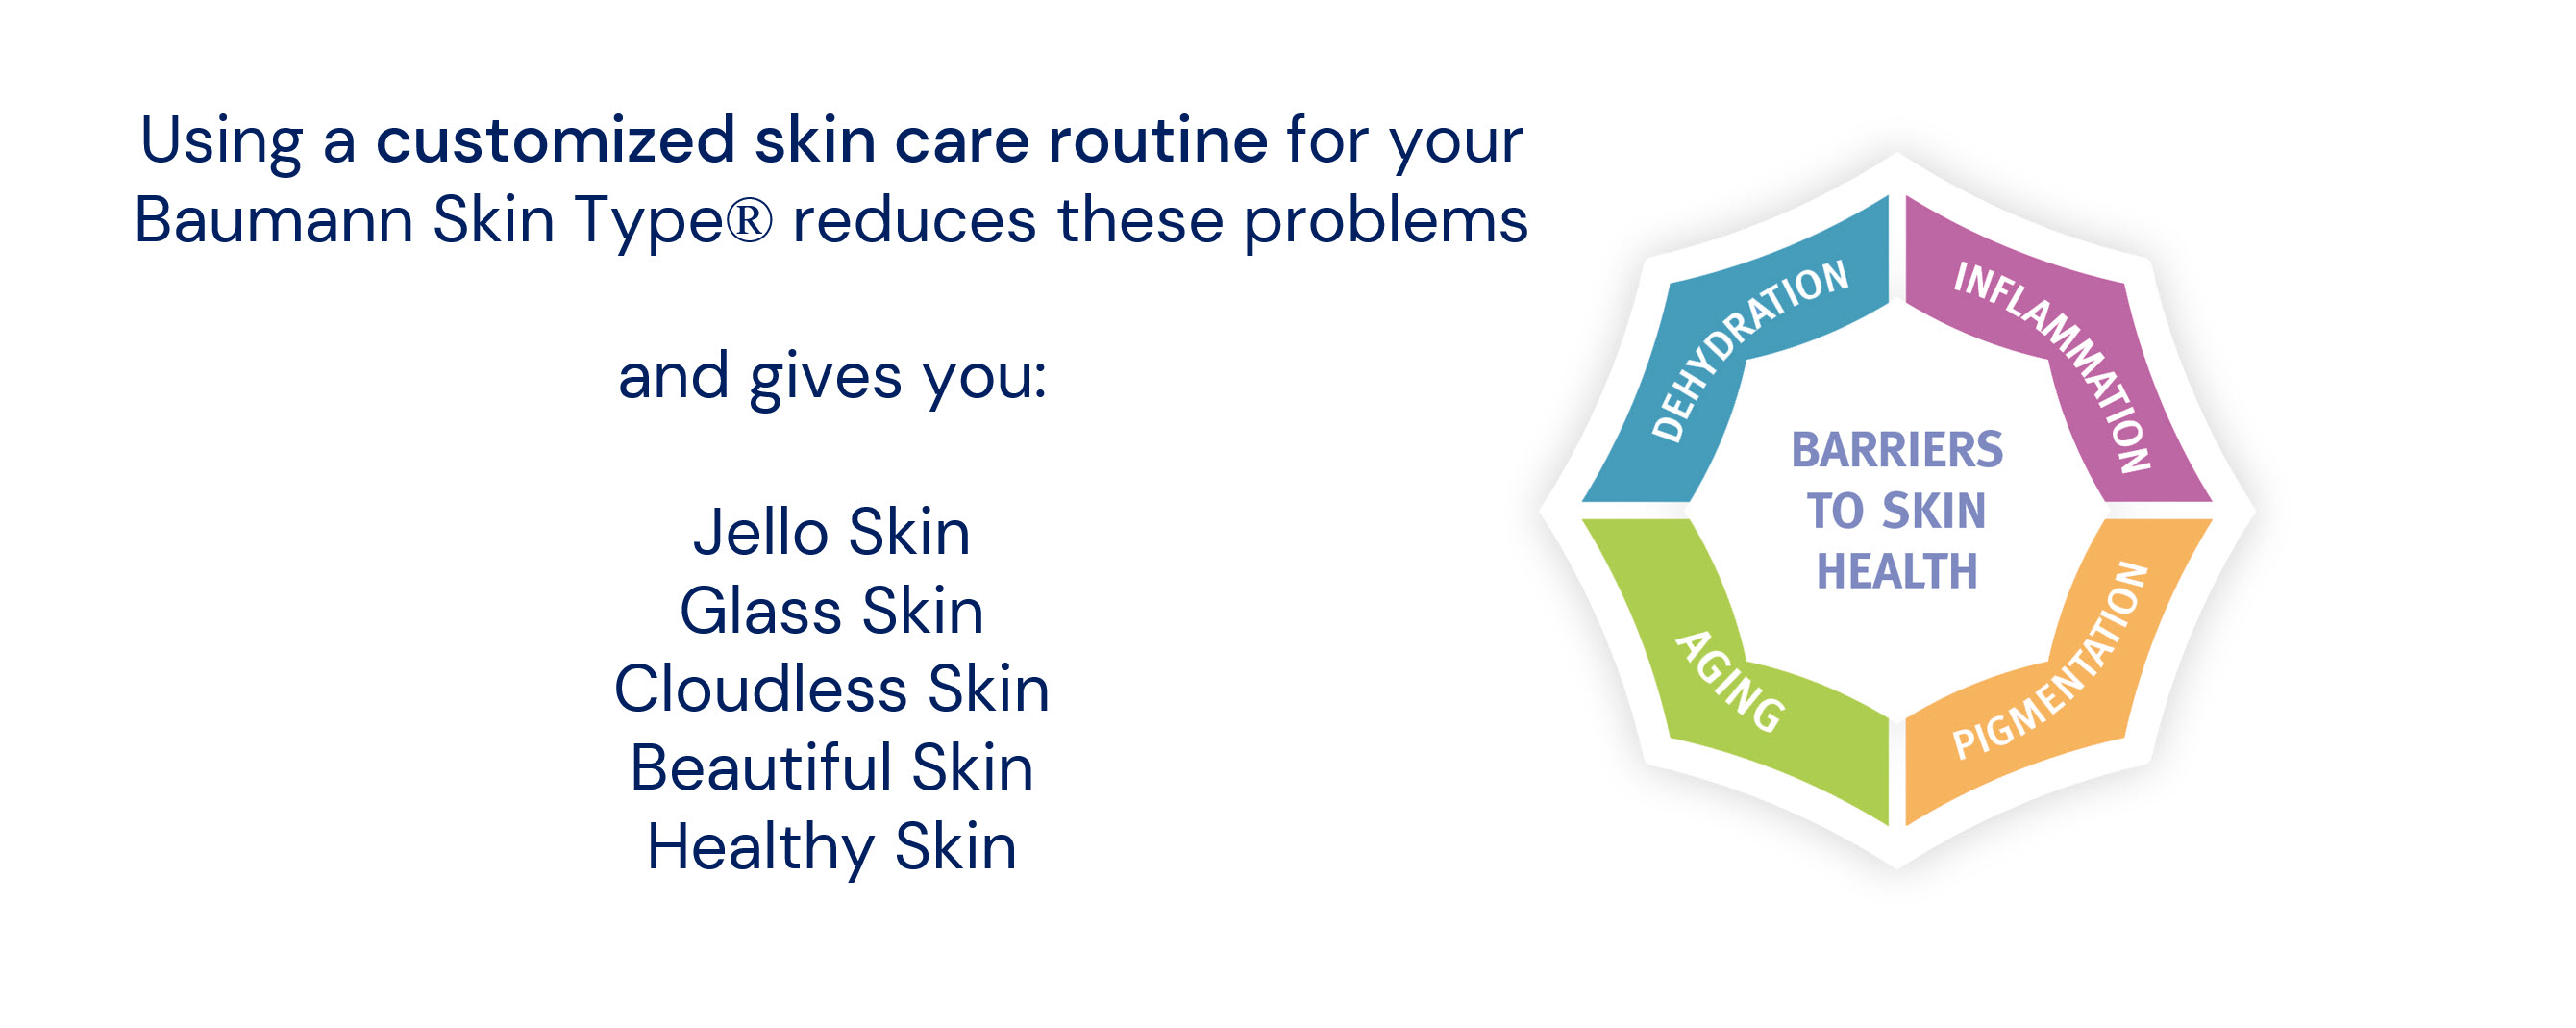 Customized Skin Care For Baumann Type.jpg